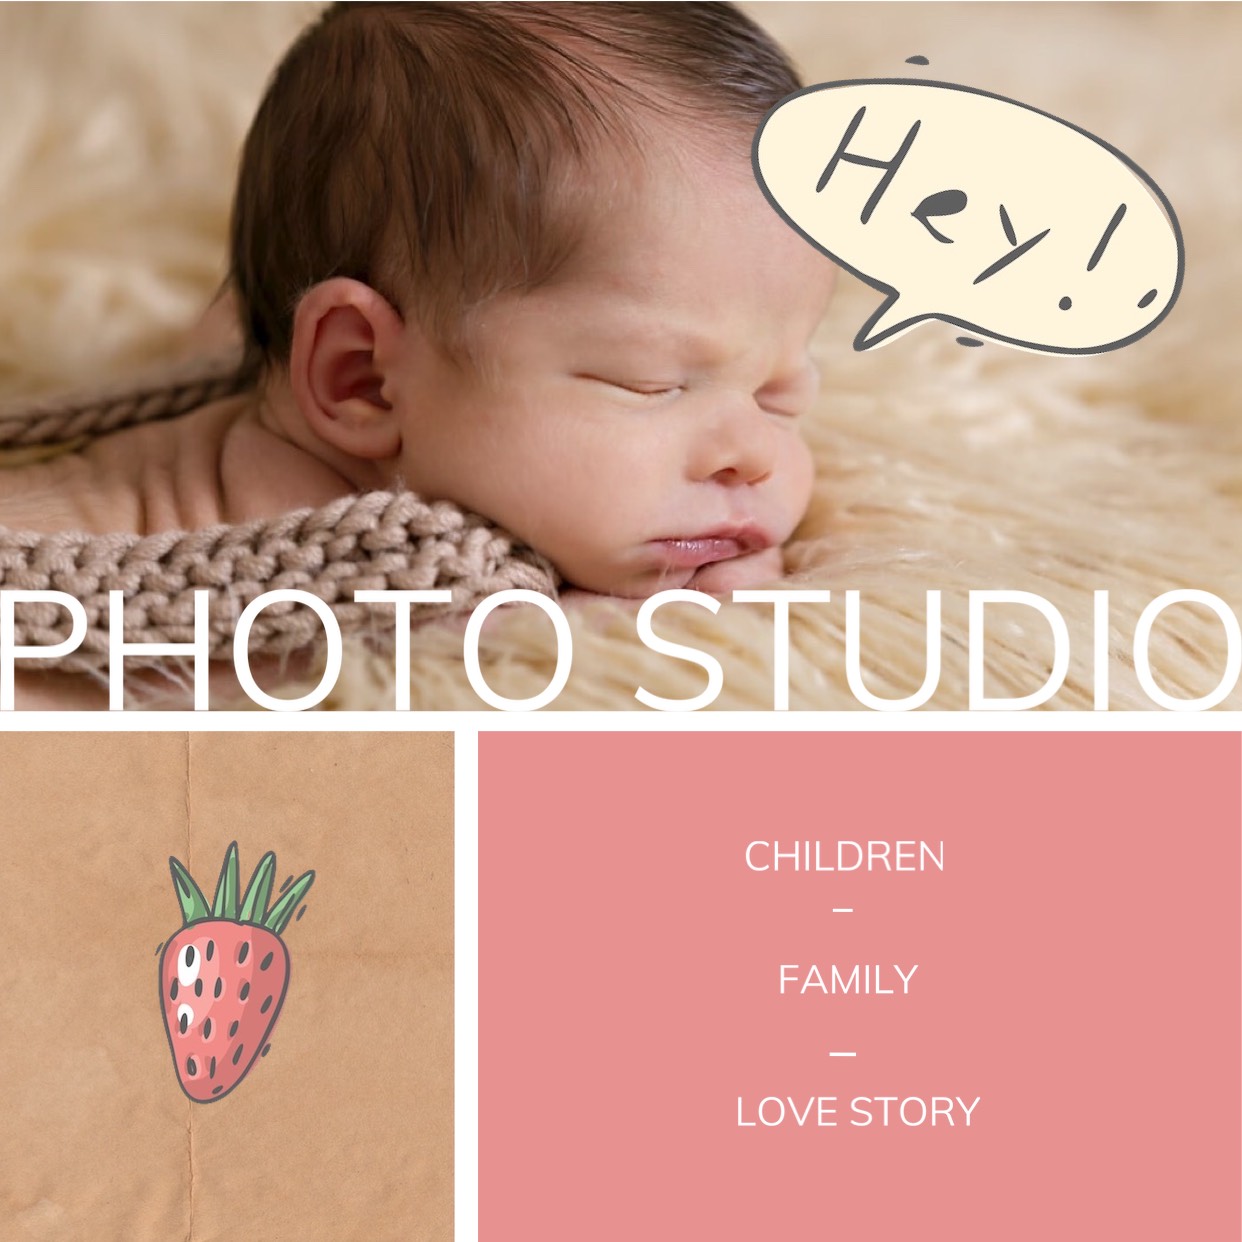 Baby sleeping photo studio collage Facebook post template